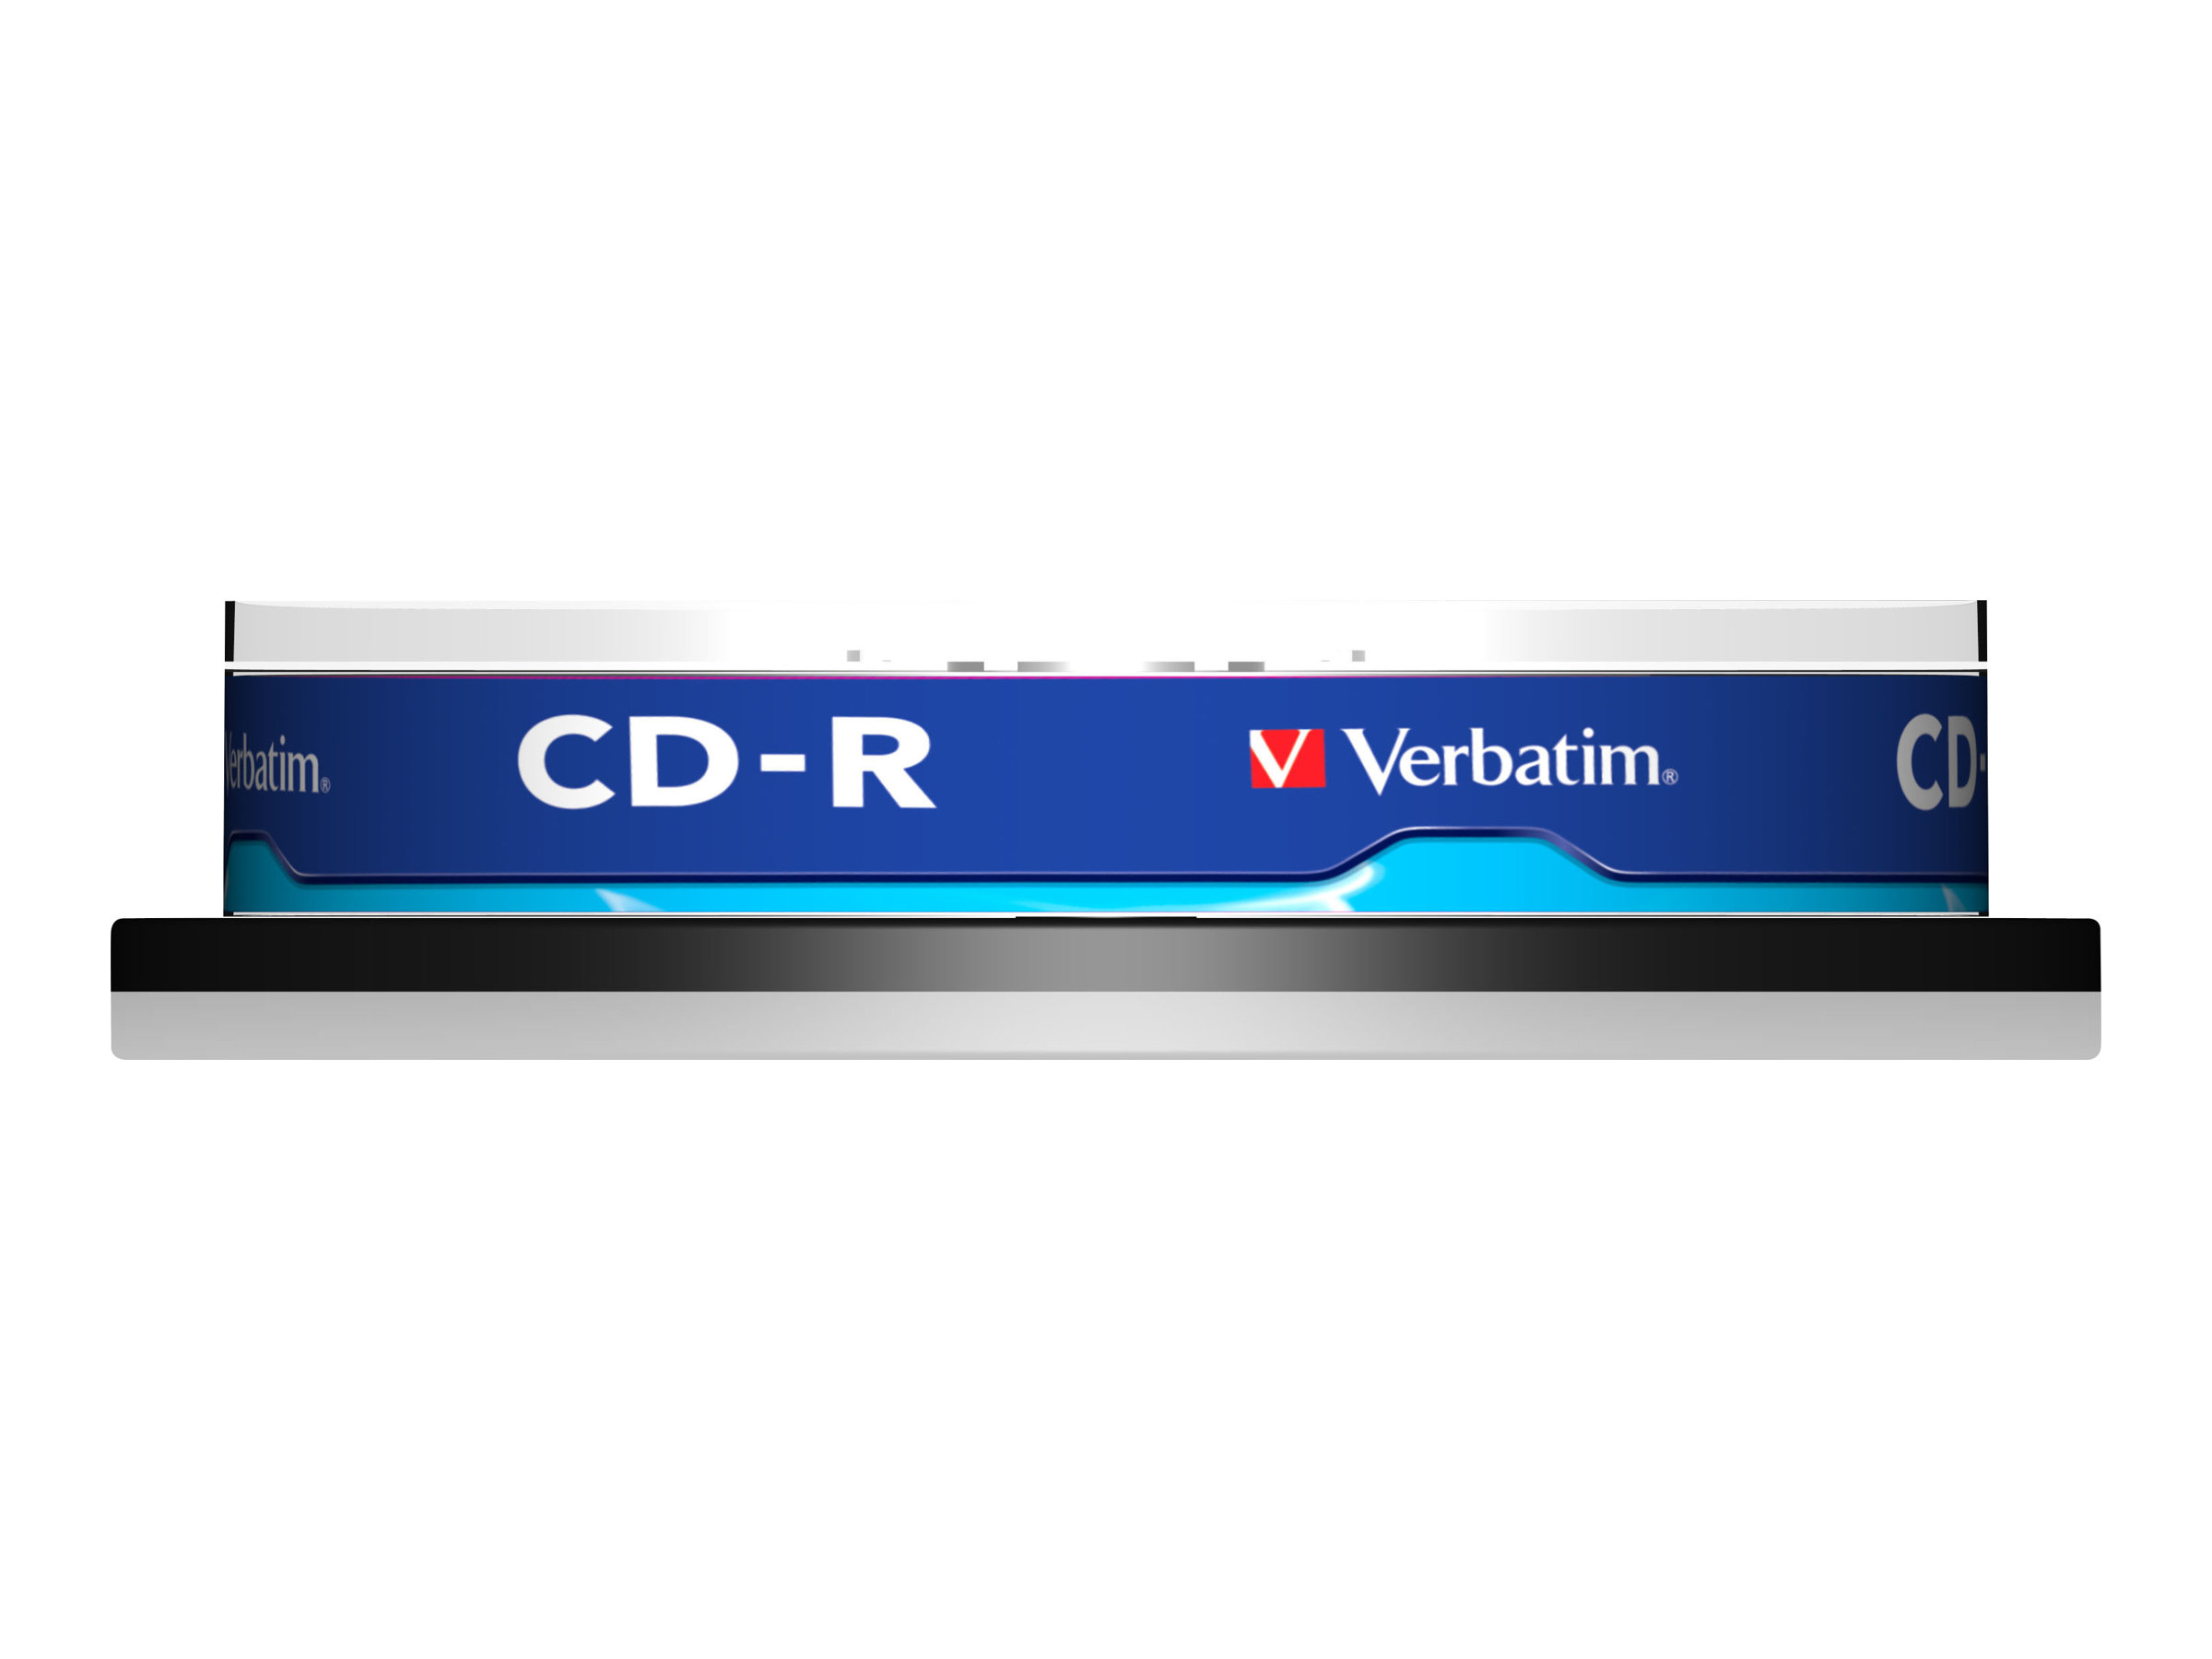 CD-R  Verbatim 700MB 10pcs Pack 52x Spindel extra protection retail